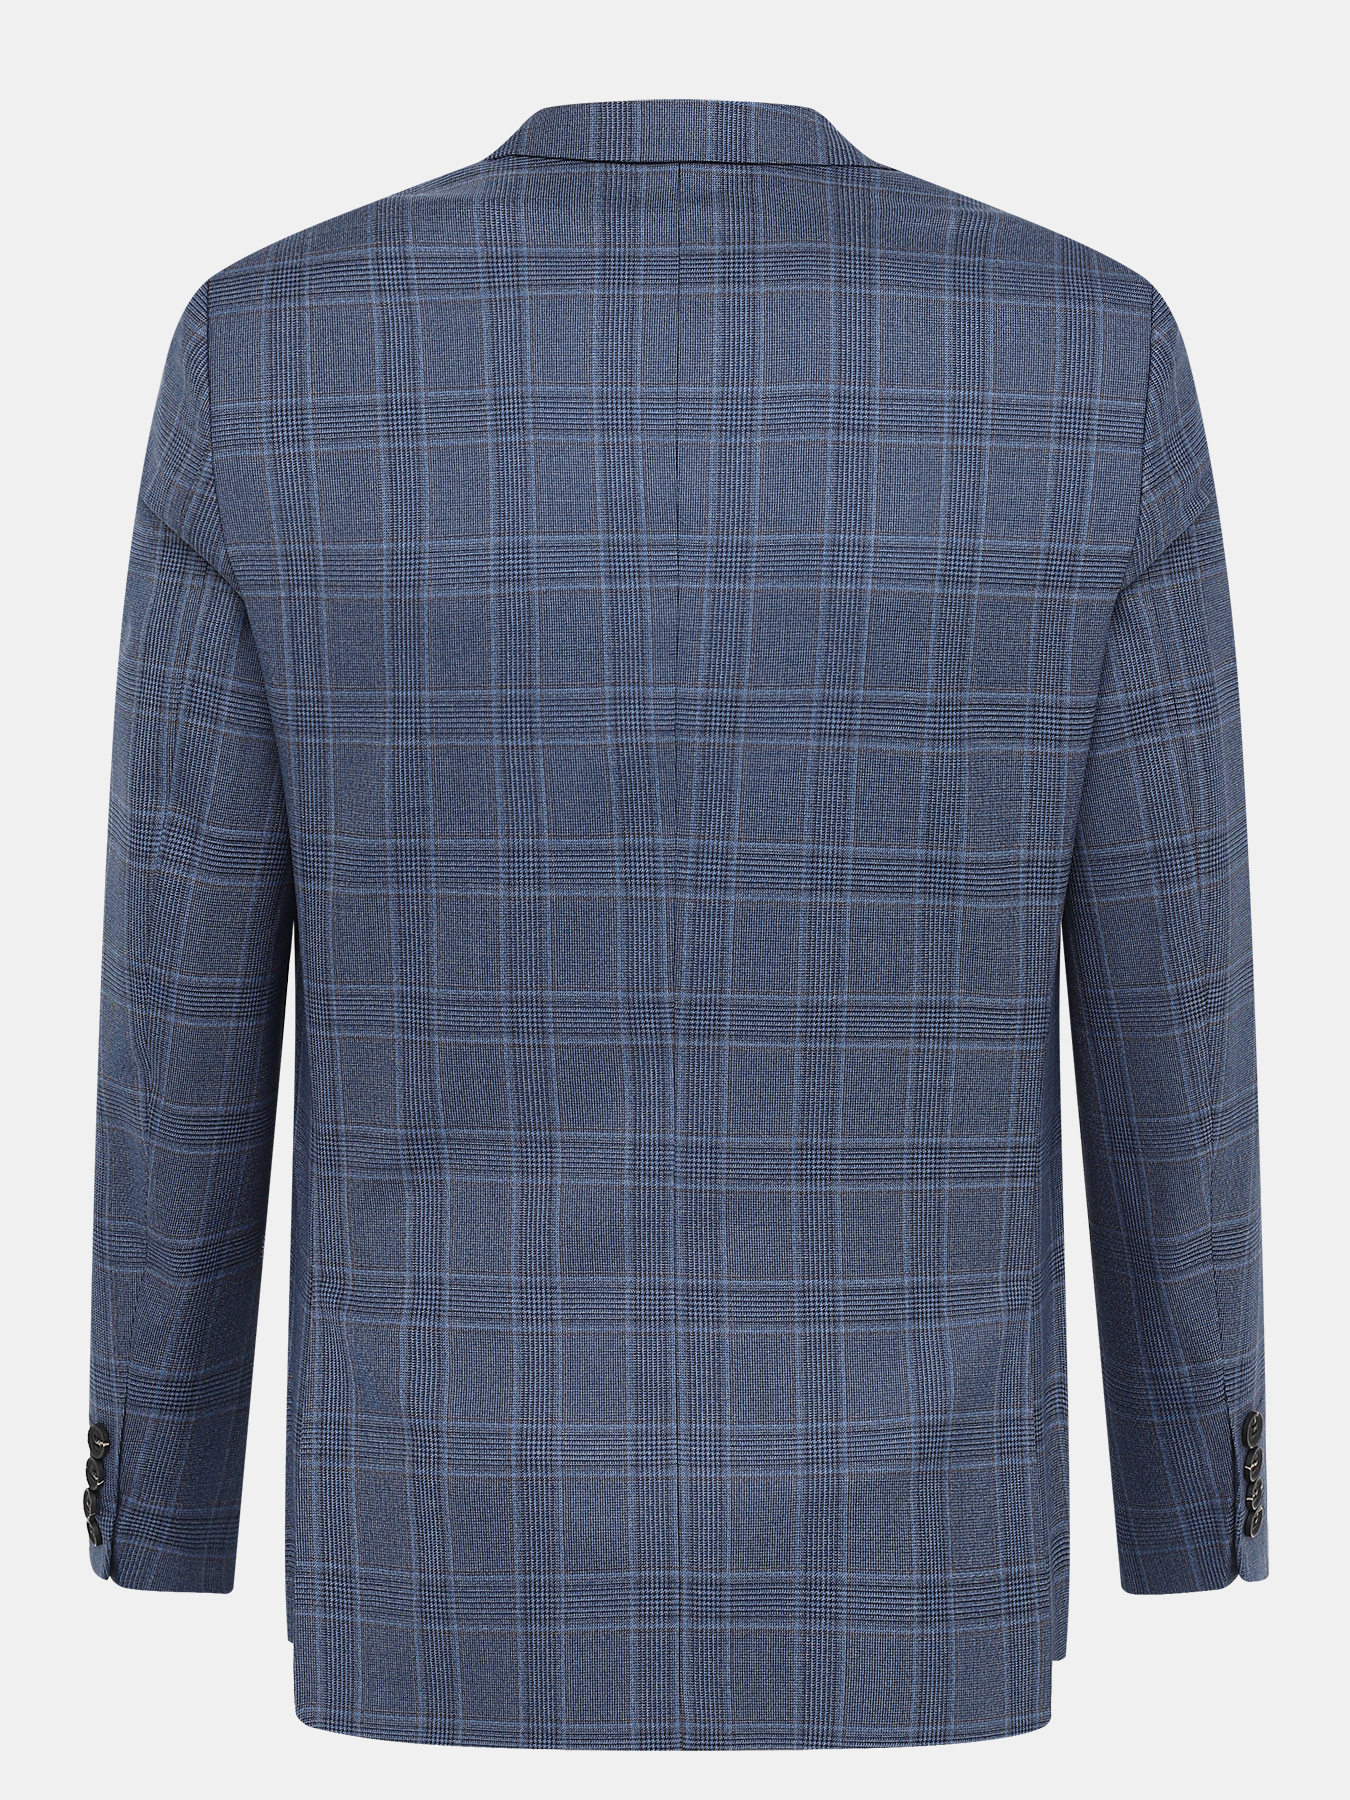 Пиджак Alessandro Manzoni 396177-382, цвет синий, размер 46 - фото 3